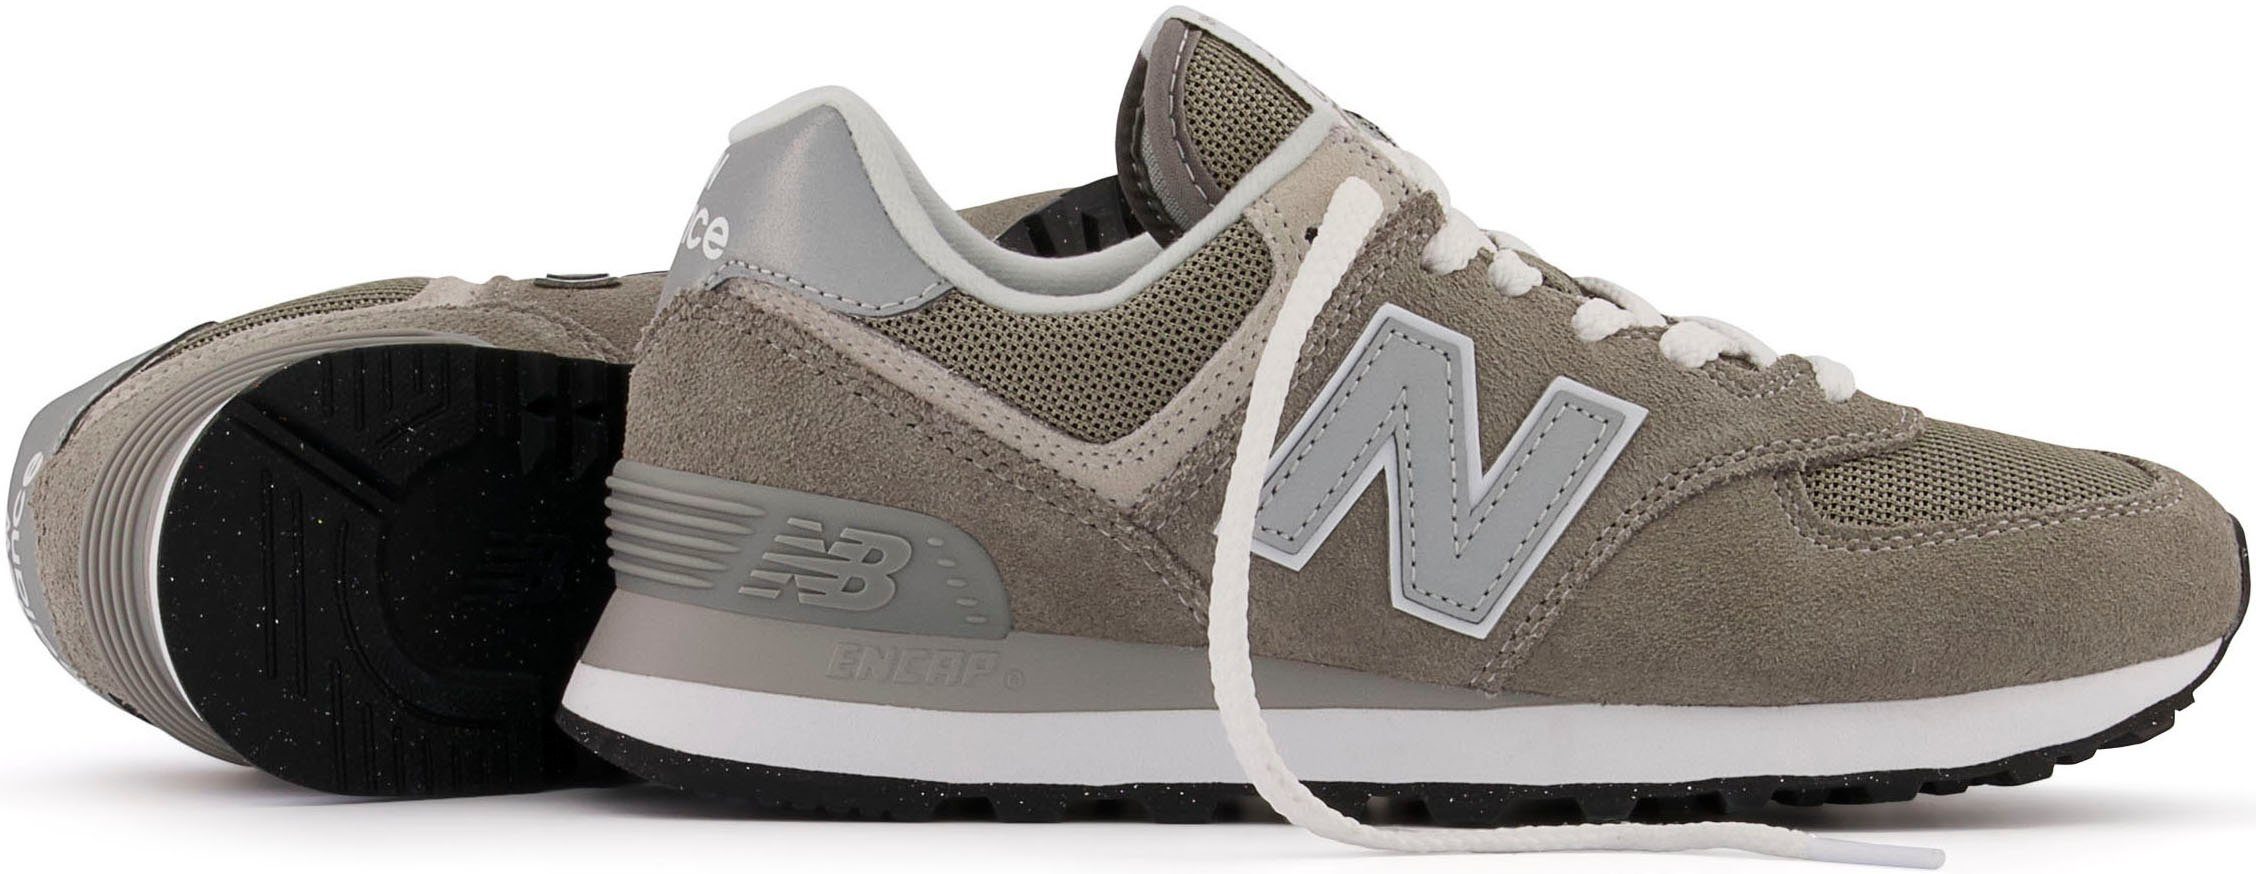 New Balance WL574 Core dunkelgrau-grau-weiß Sneaker